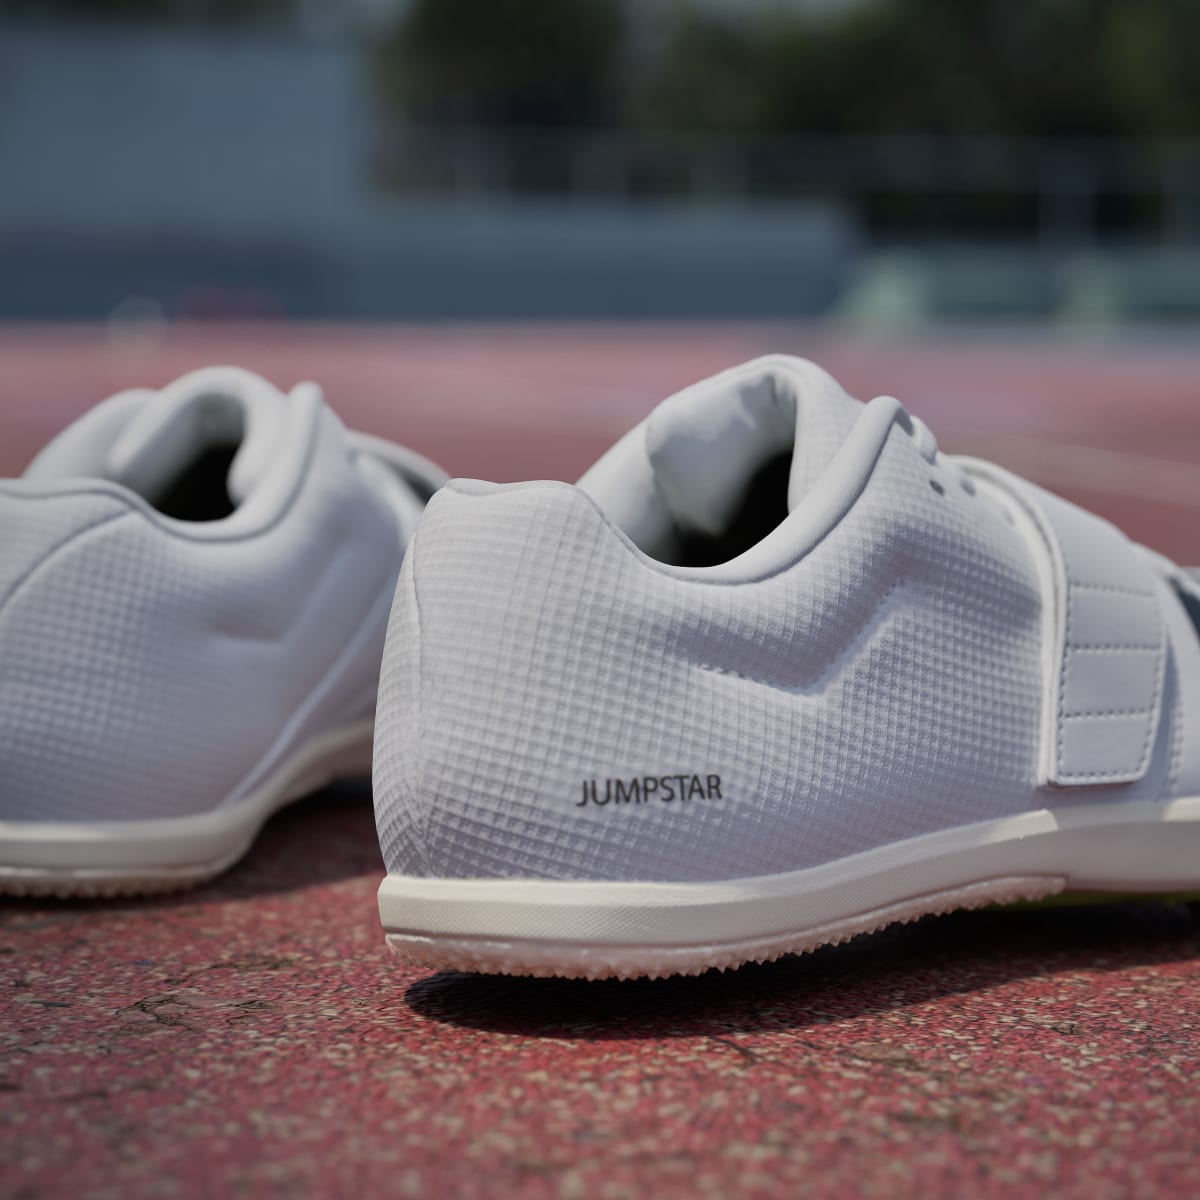 Adidas Zapatilla Jumpstar. 9